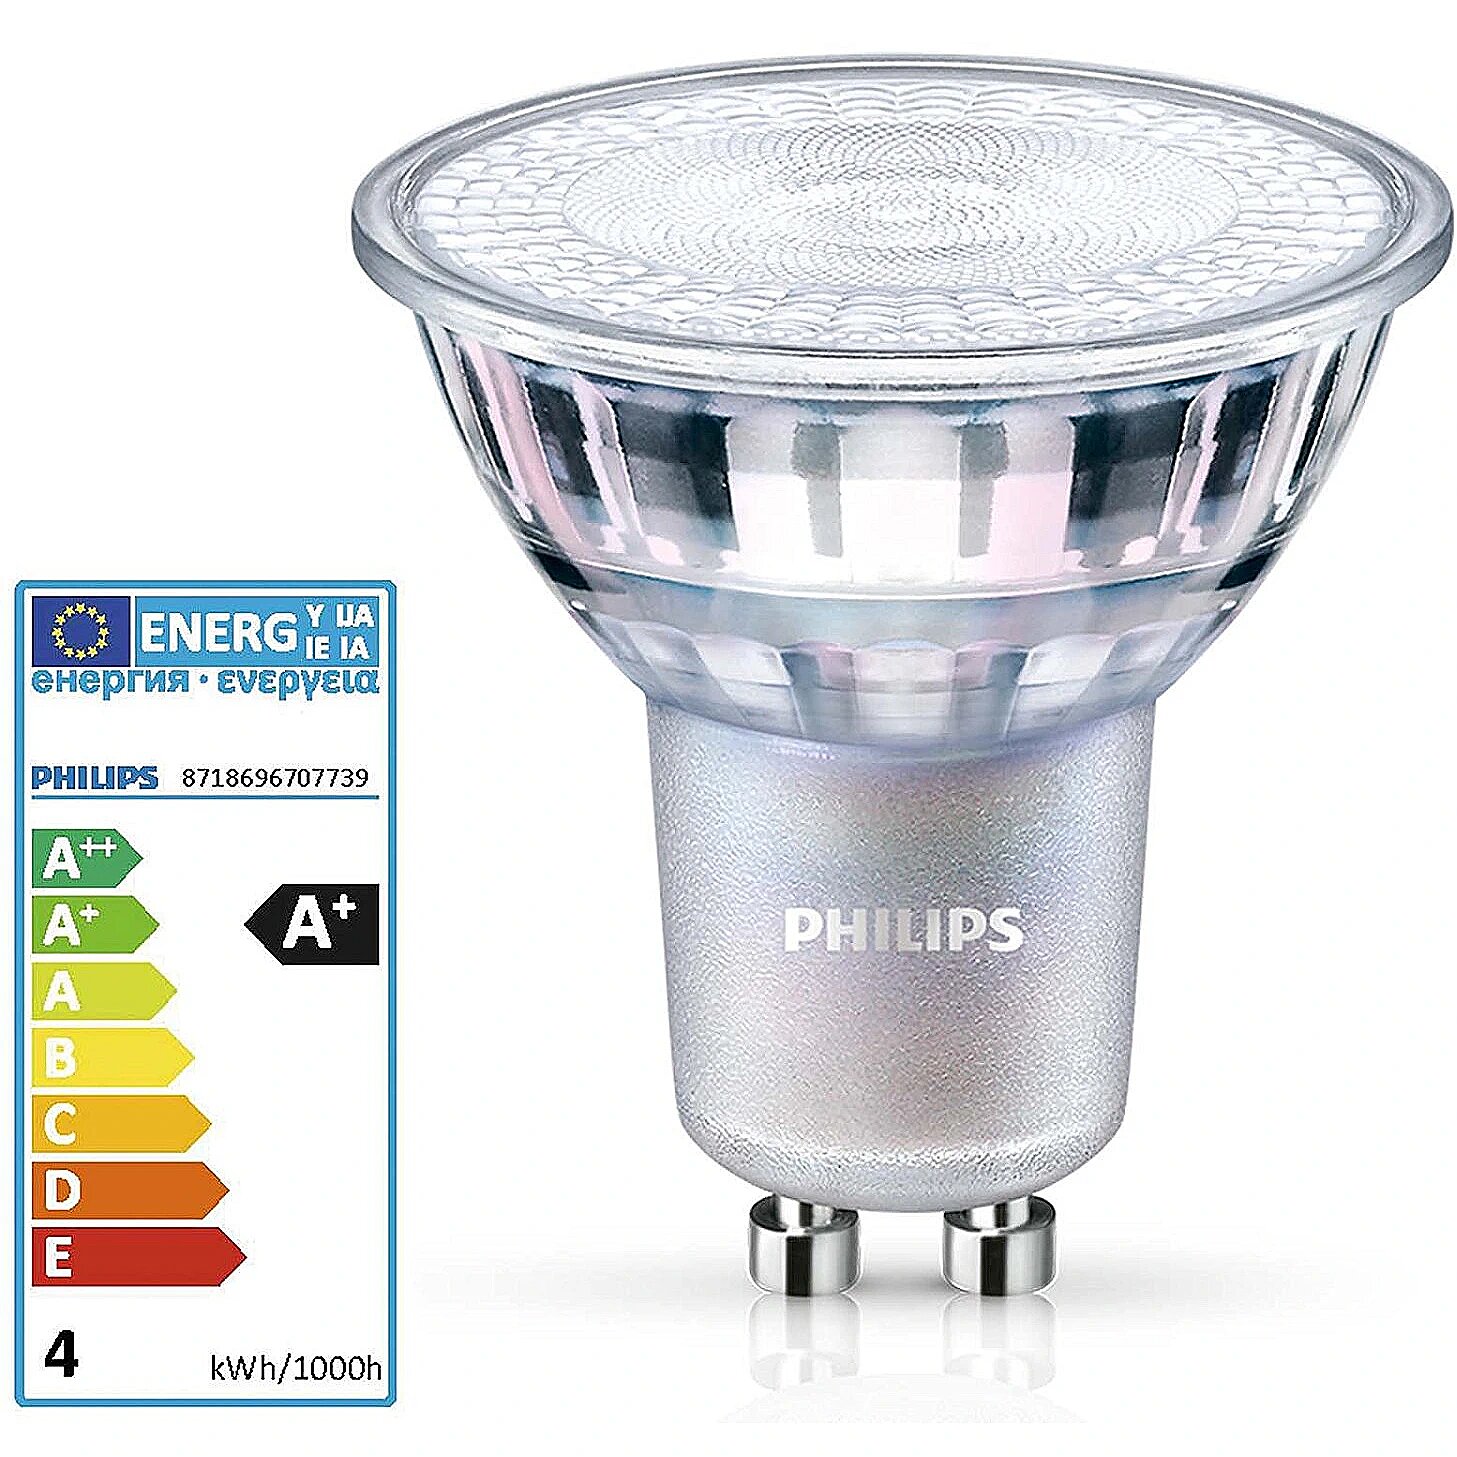 Филипс мастер. Светодиодная лампа Philips Essential led 4.6-50w gu10 827 36°. Лампа Philips Essential gu10. Лампа Филипс Mr 16 gu10 маленькая. Gu10 лампа светодиодная 6500 к прозрачная.